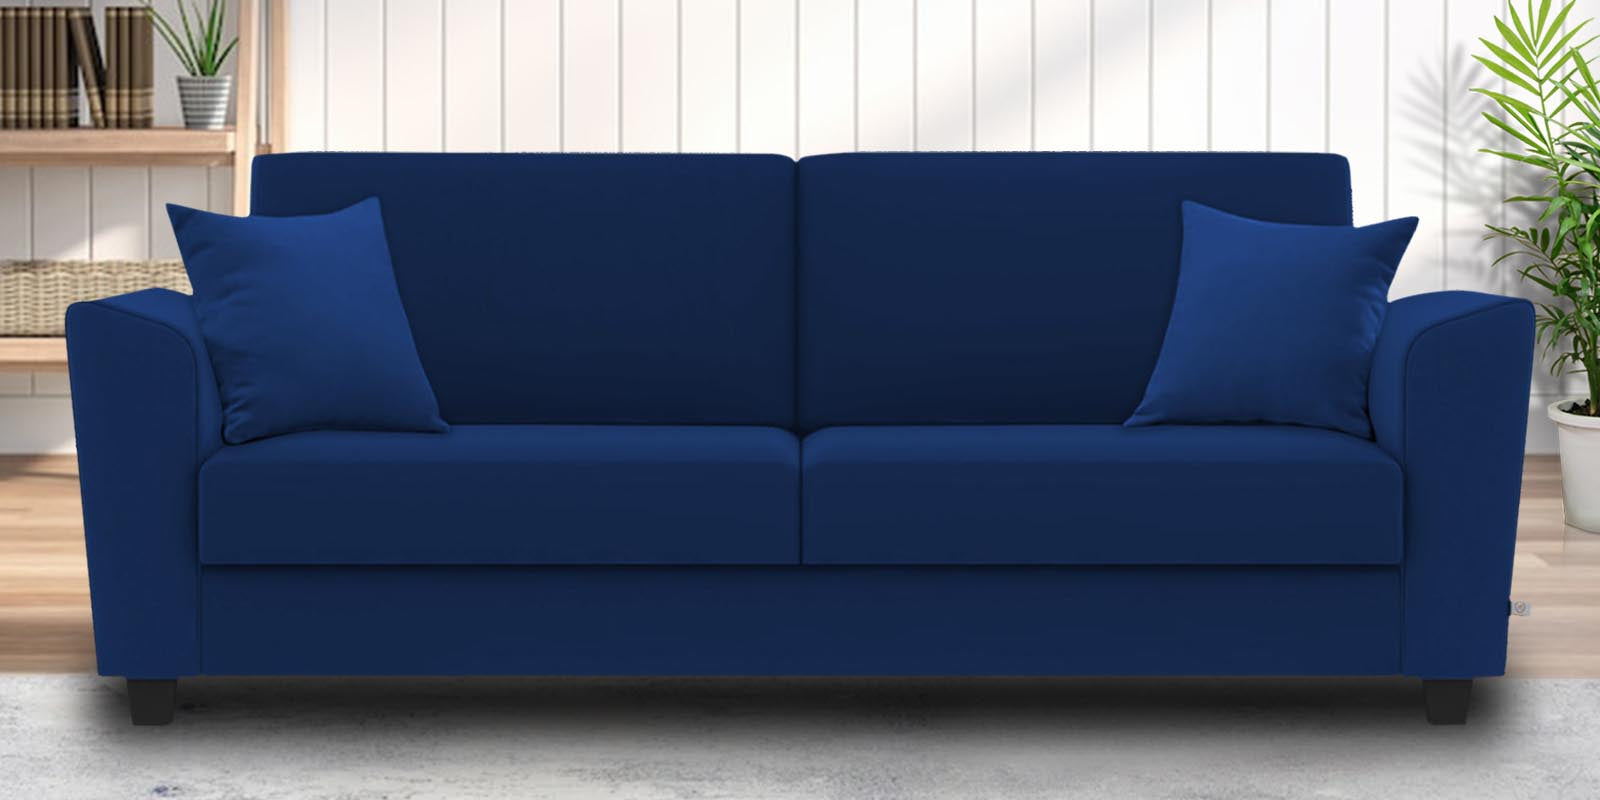 Daku Fabric 3 Seater Sofa in Royal Blue Colour